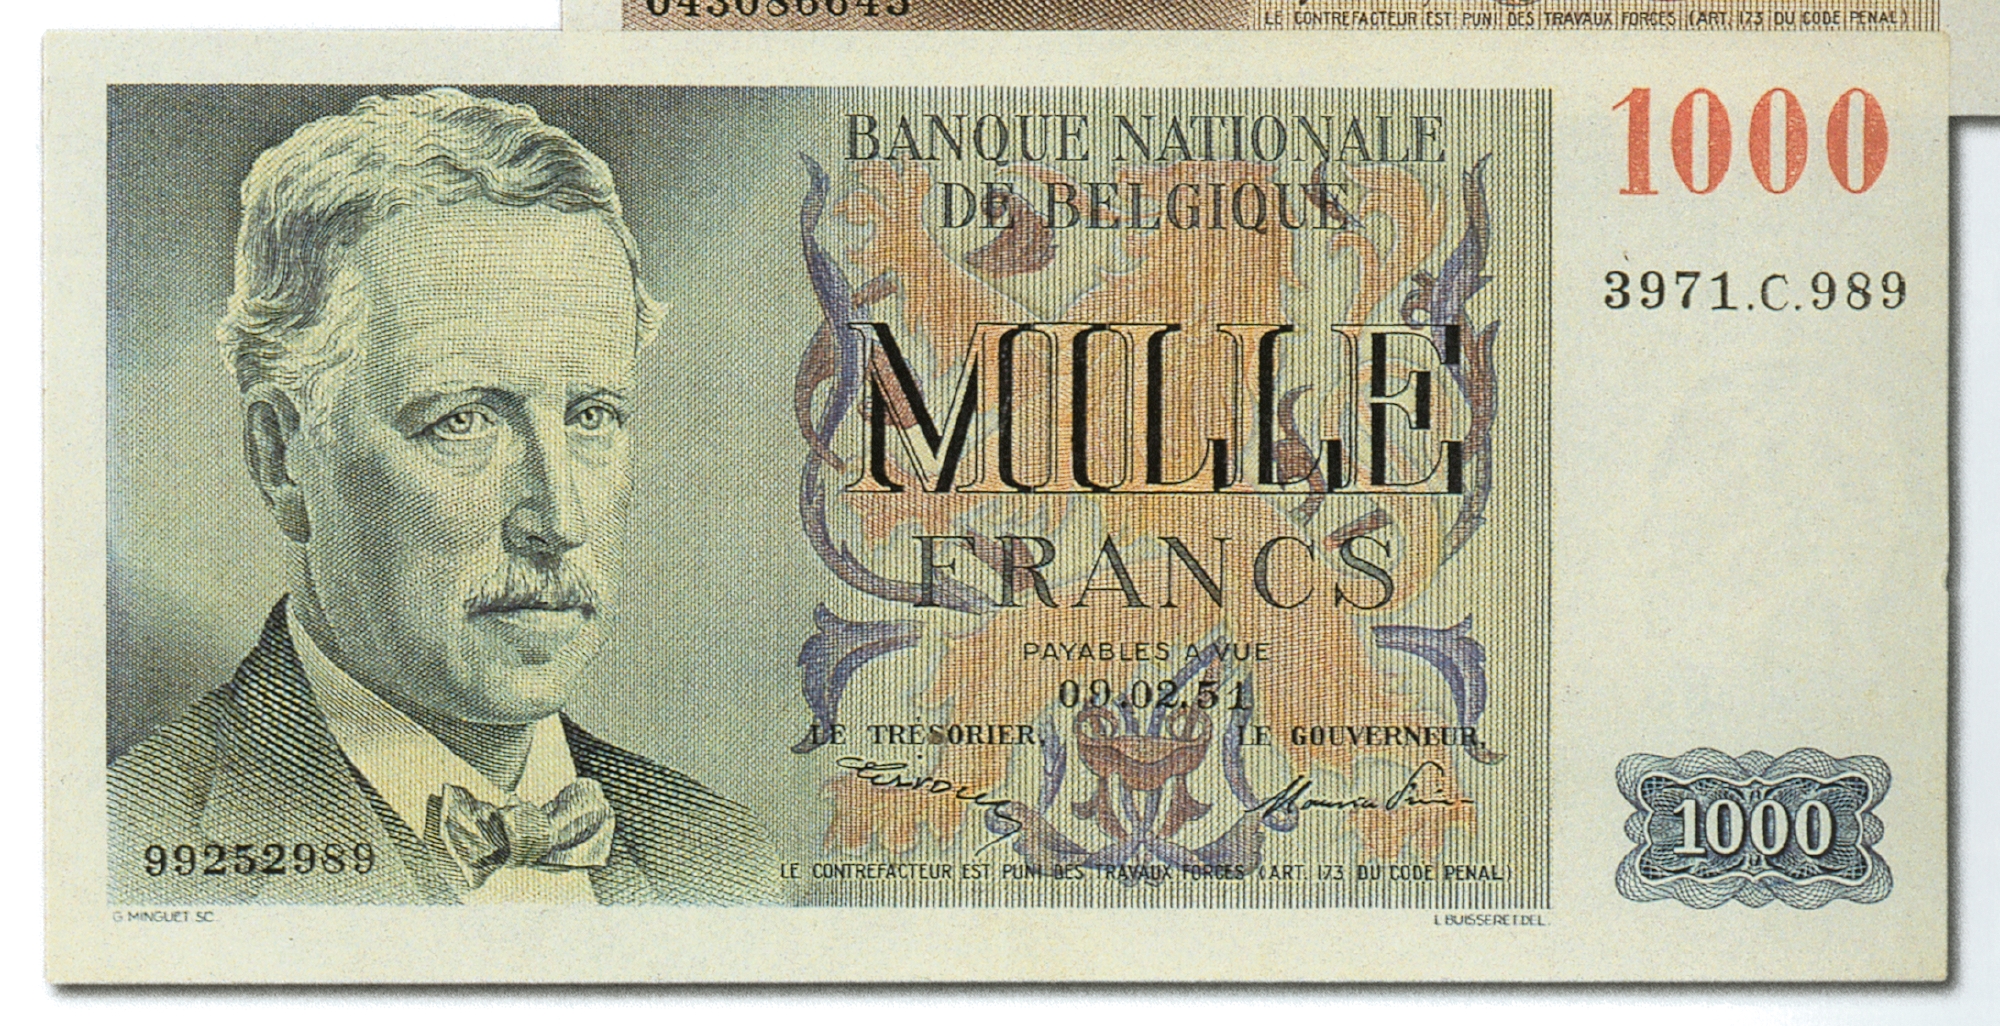 1930 - Koning Albert I op een bankbiljet